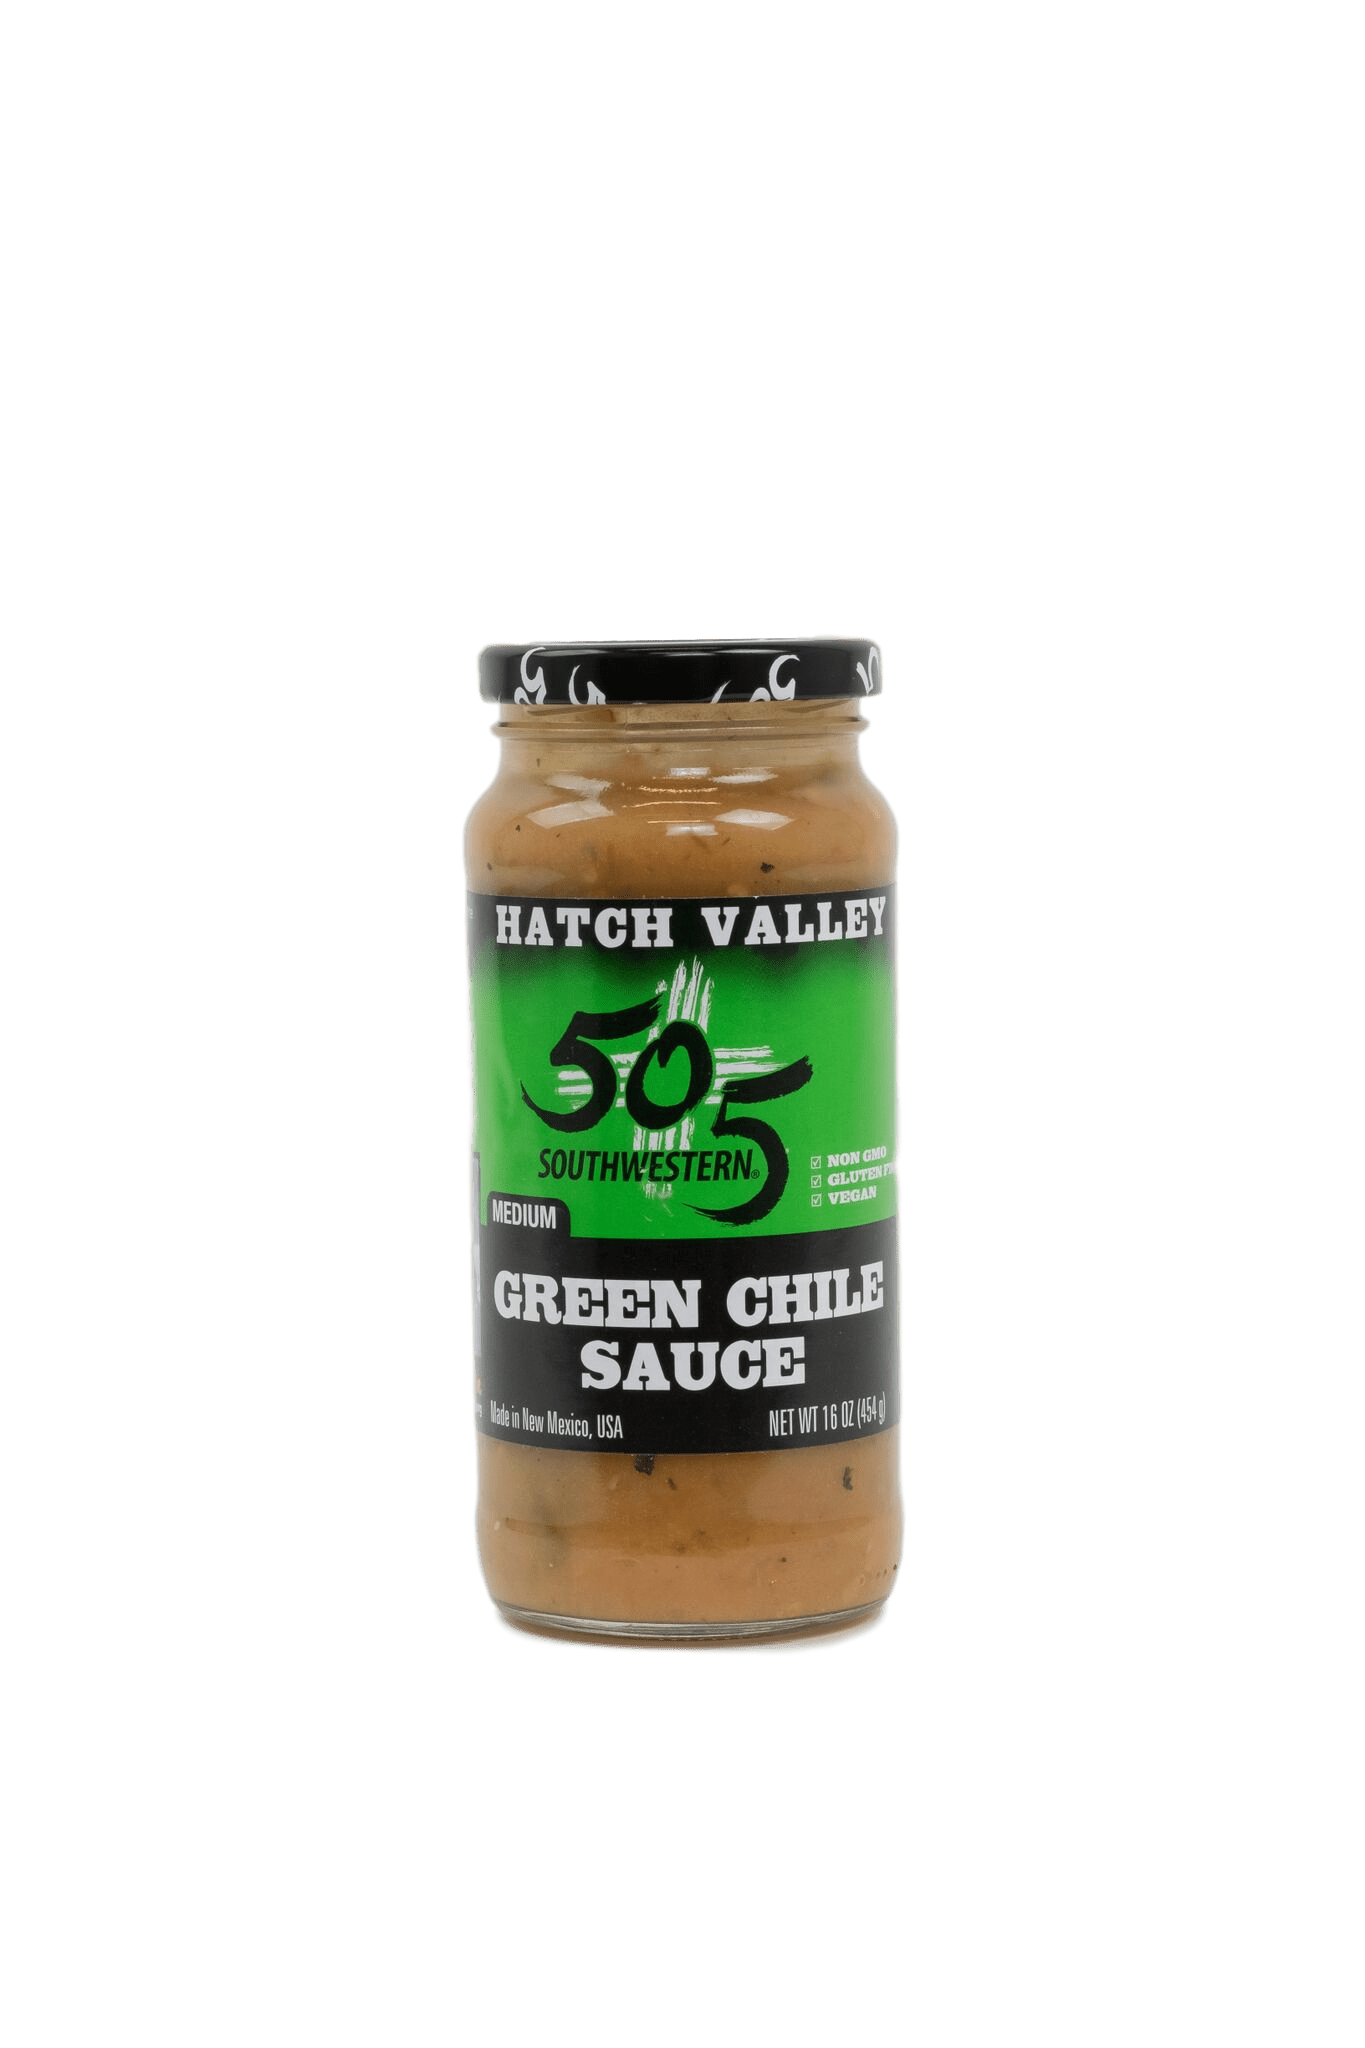 505 Southwestern Medium Green Chile Sauce, 16 oz - Walmart.com